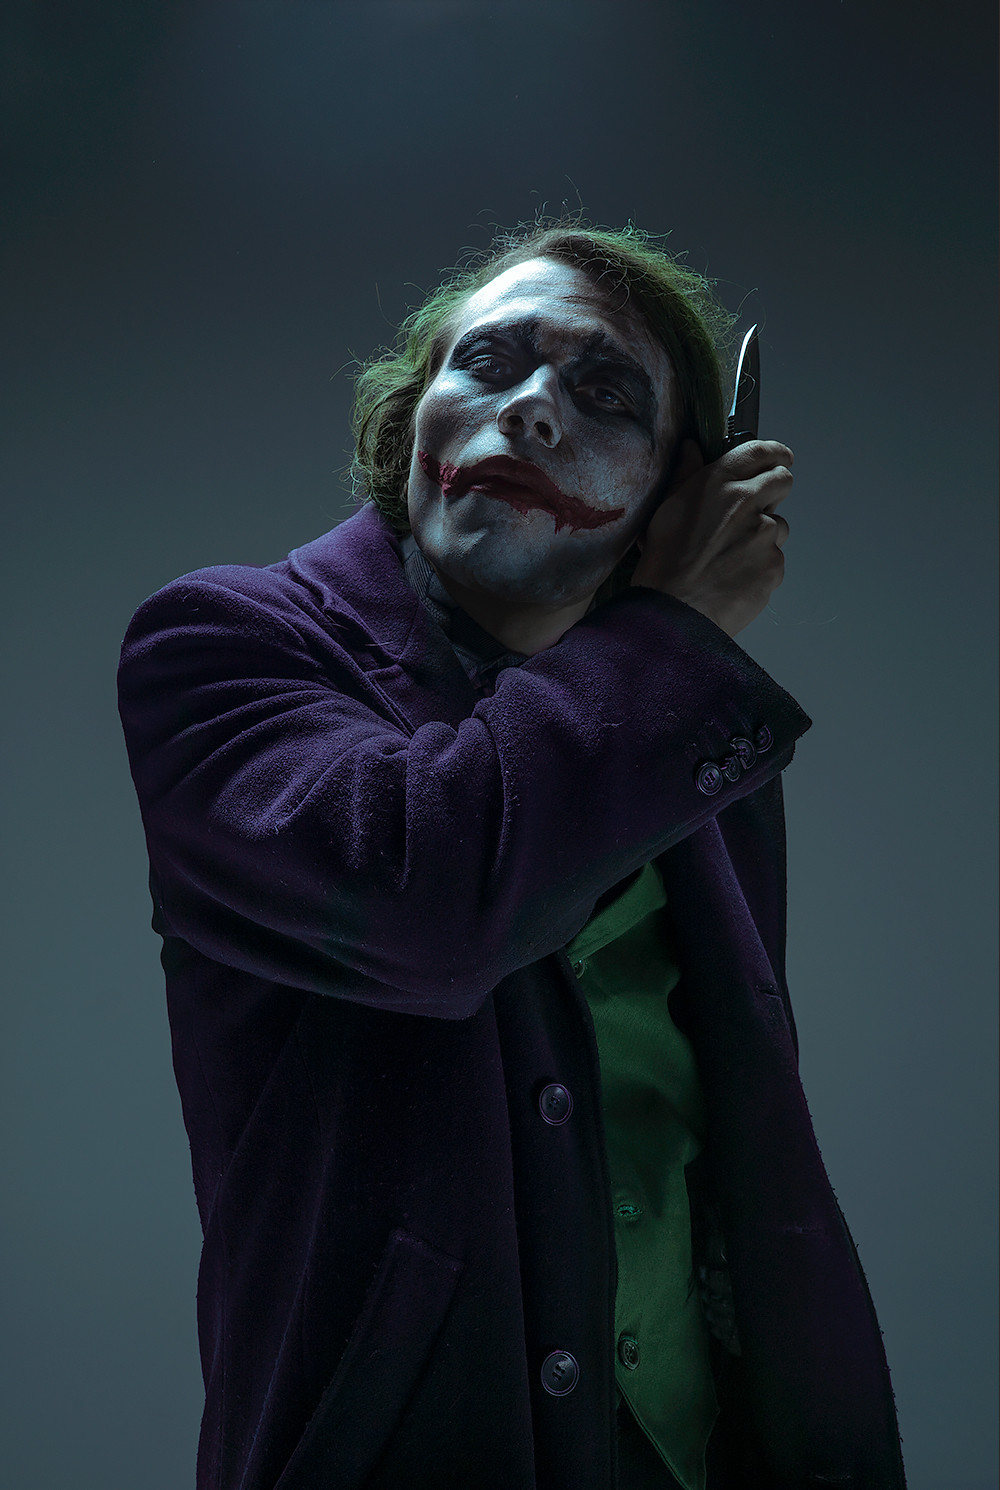 Joker with joker card Wallpaper Download | MobCup